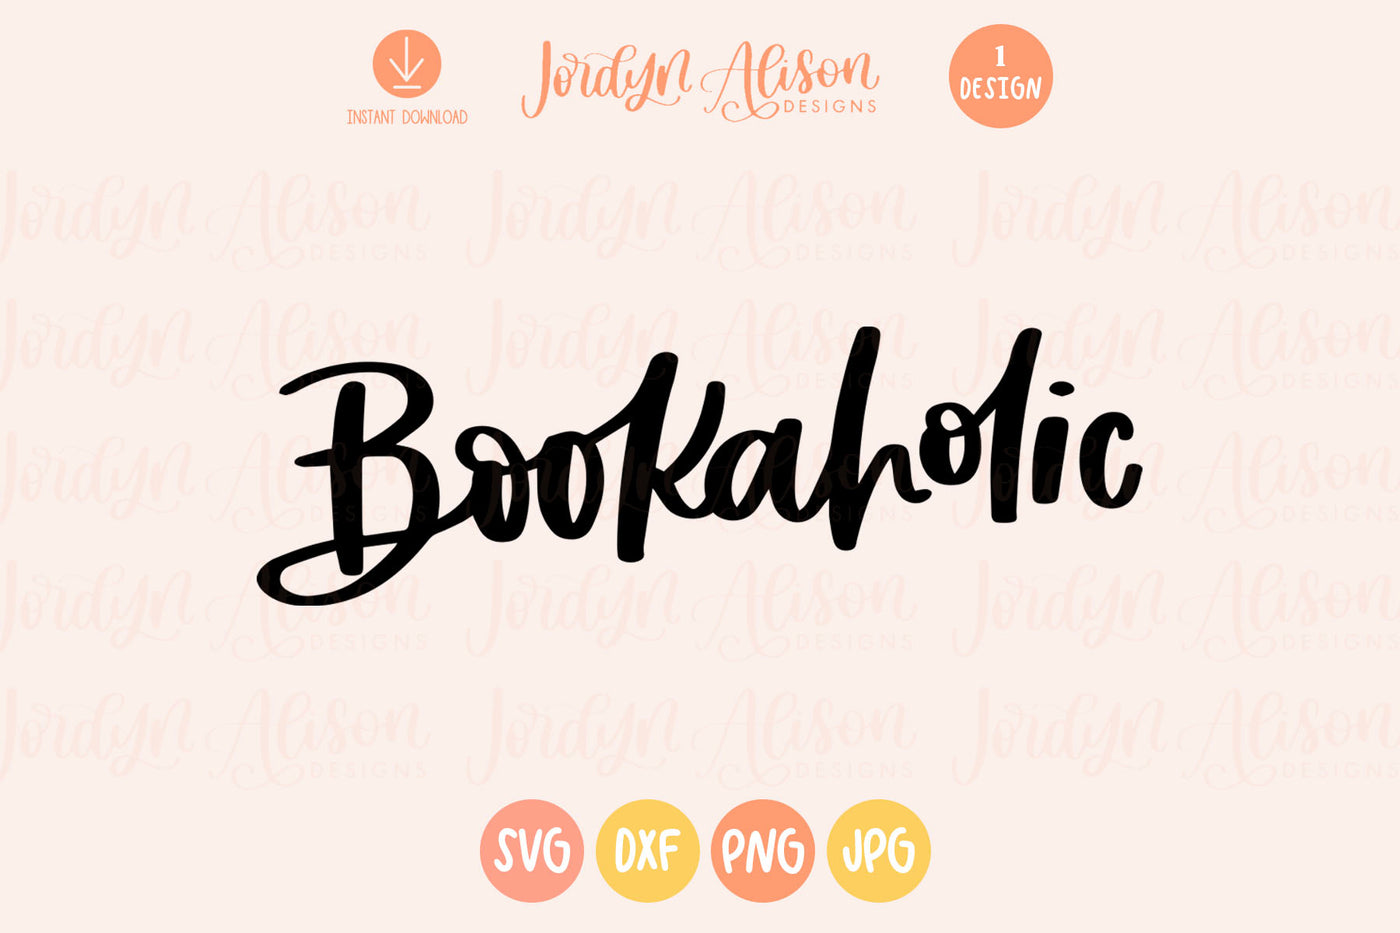 Bookaholic SVG